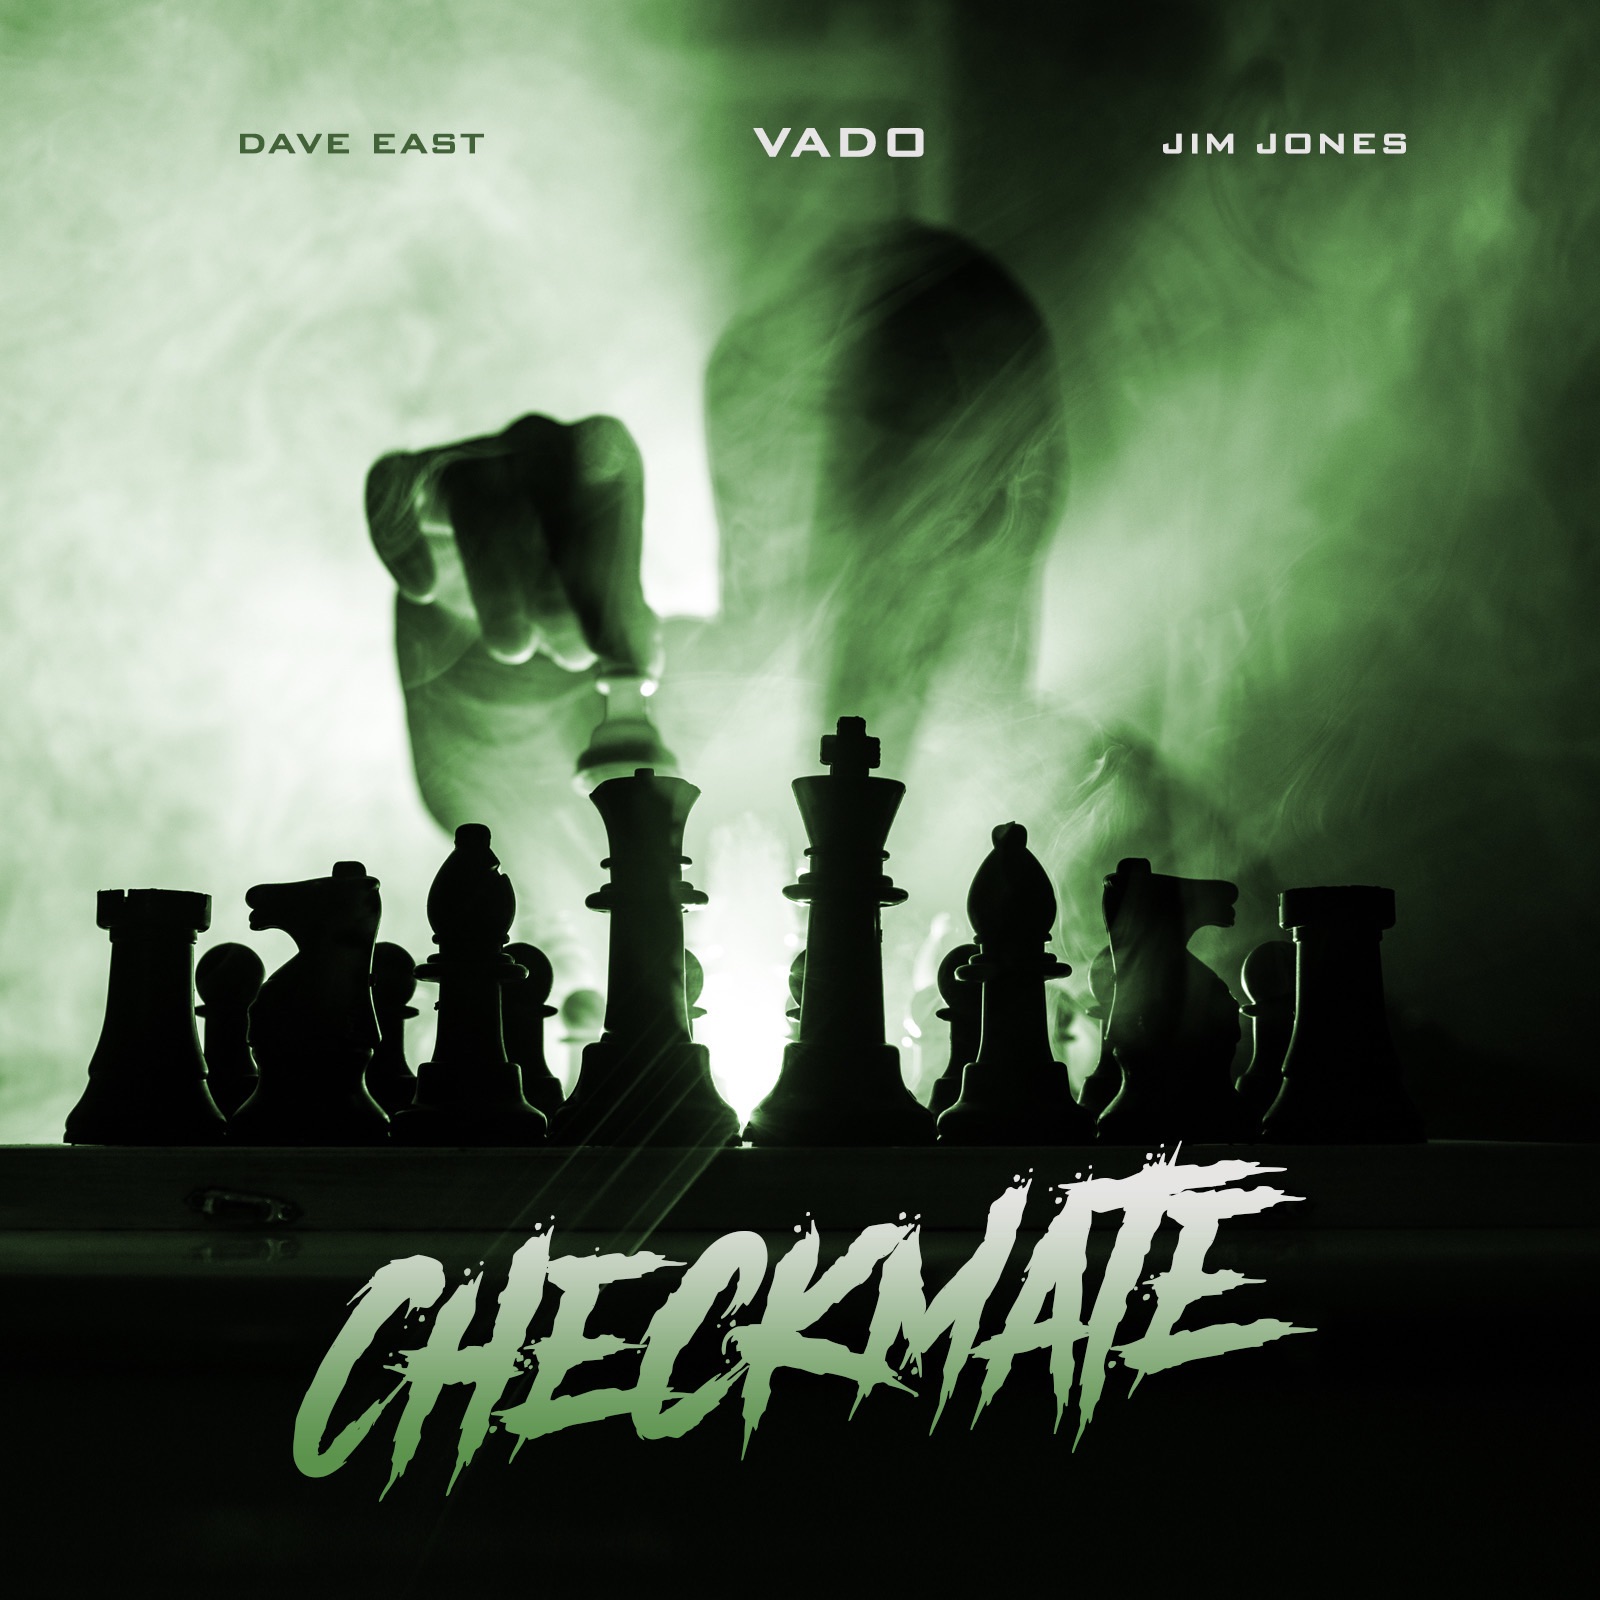 Vado - Checkmate (feat. Dave East & Jim Jones) - Single